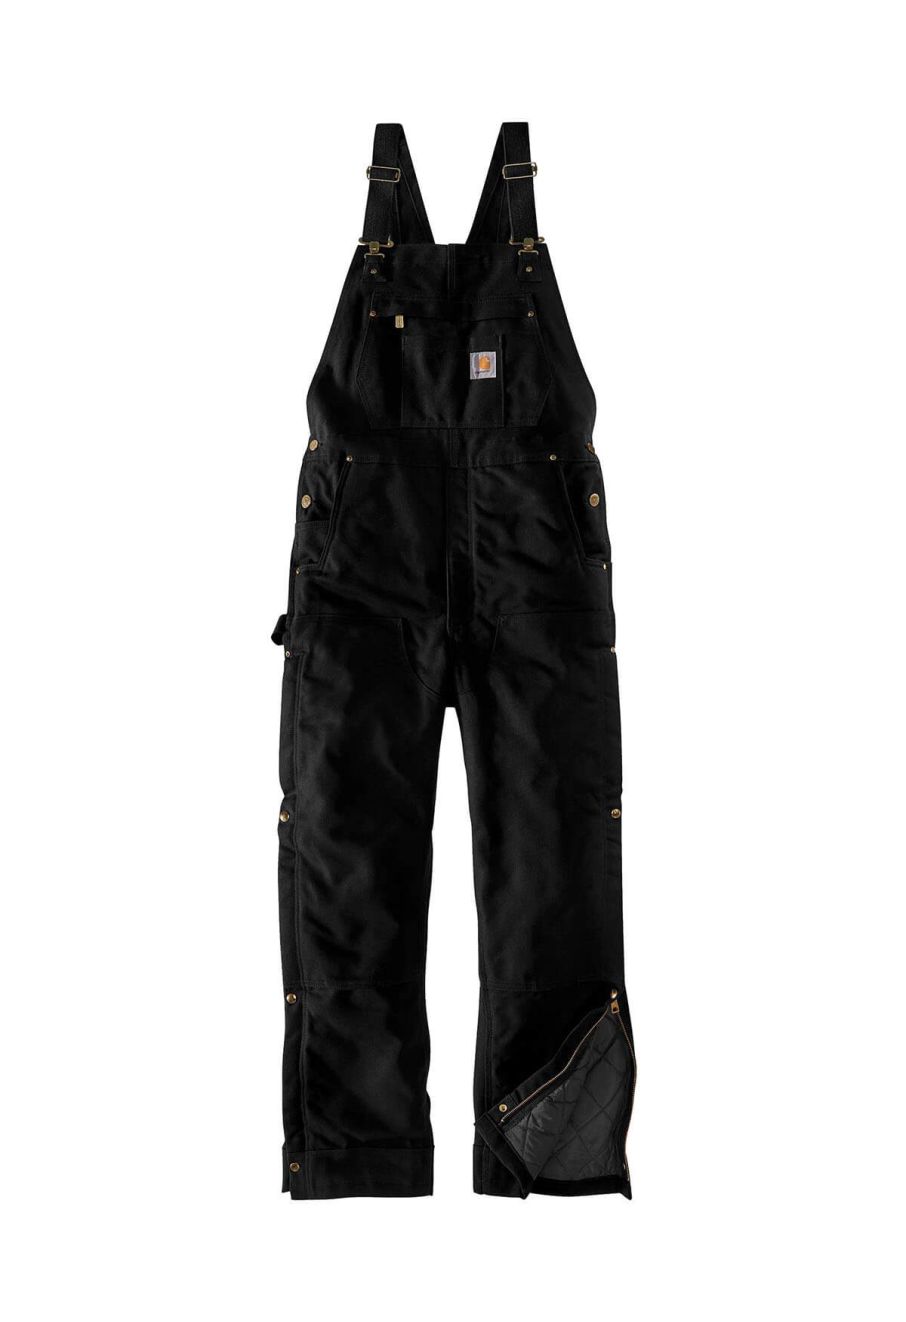 Carhartt Men's Quilt-Lined Washed Duck Bib Overalls - Black,L